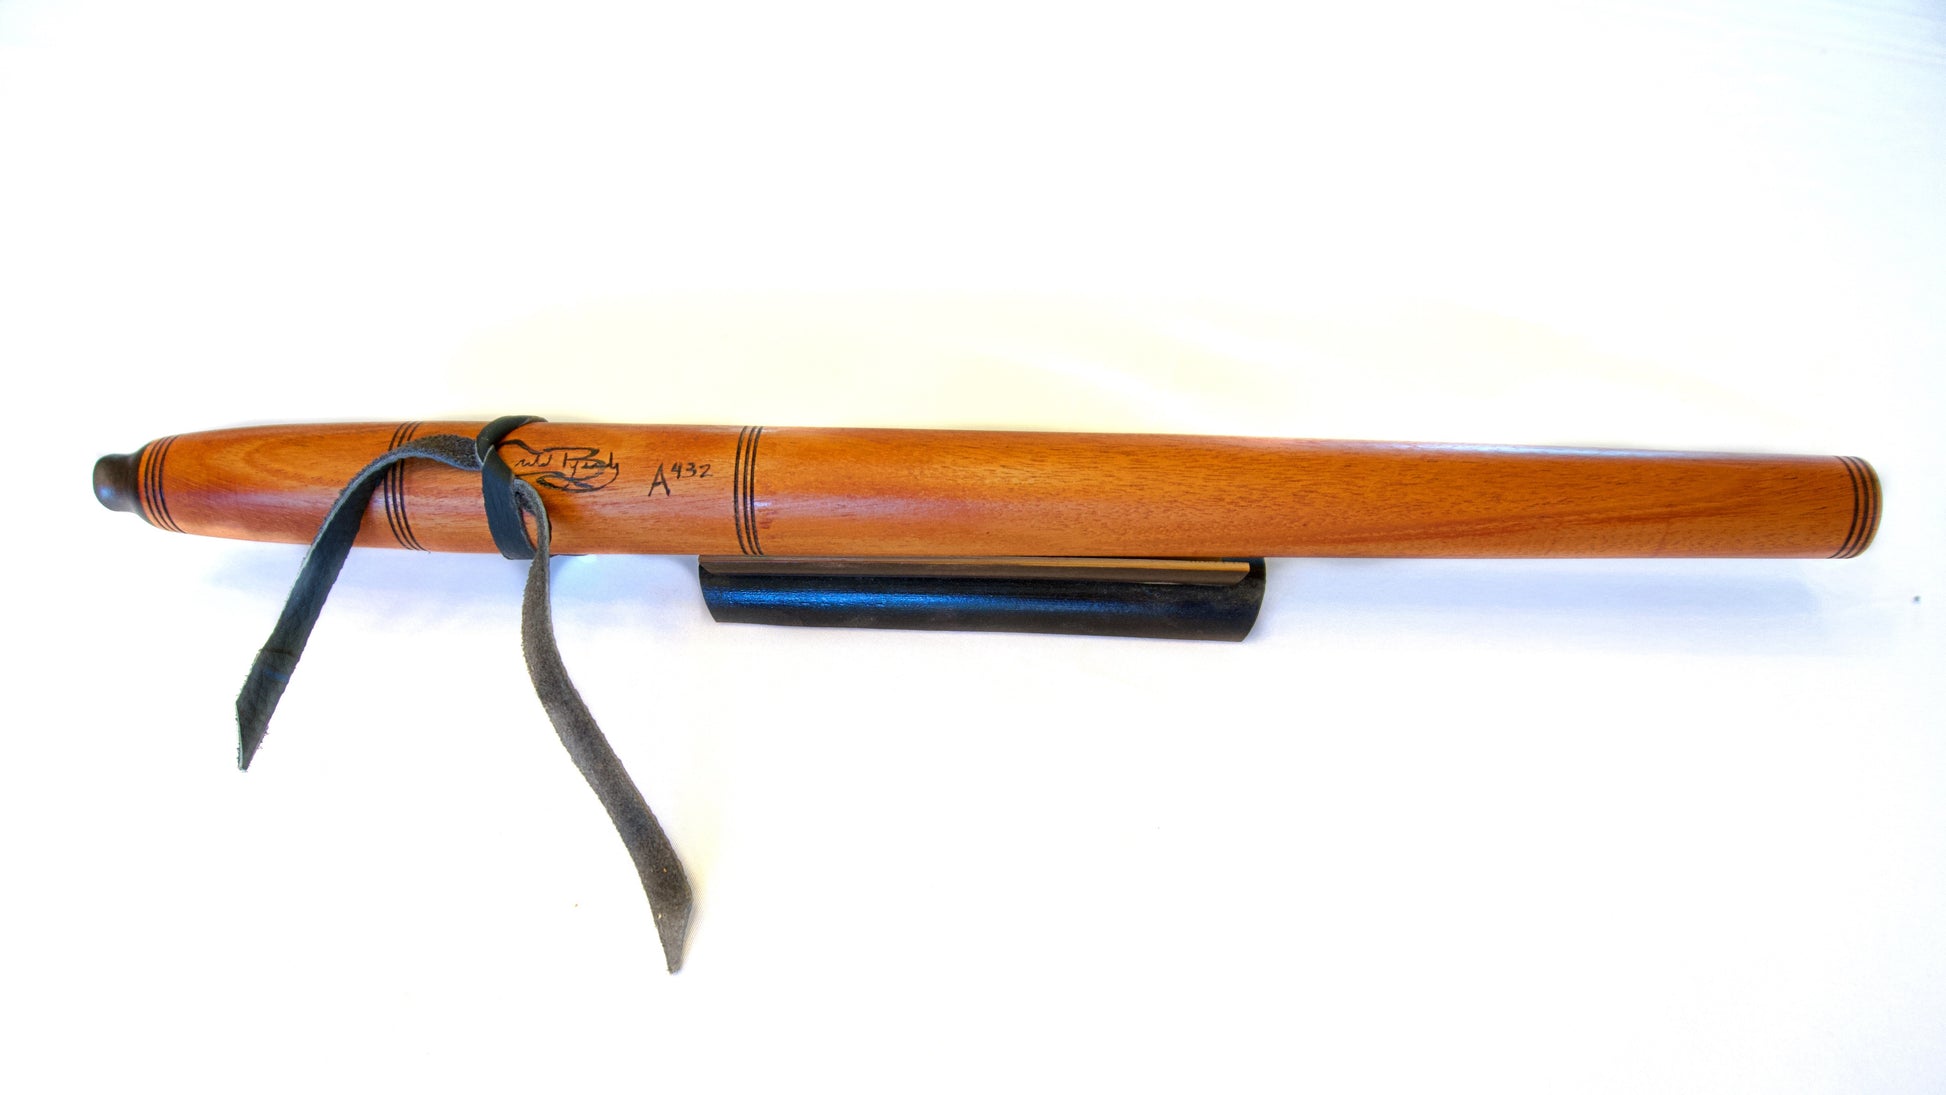 Native American Style Flute - Mahogany: A432 tuning